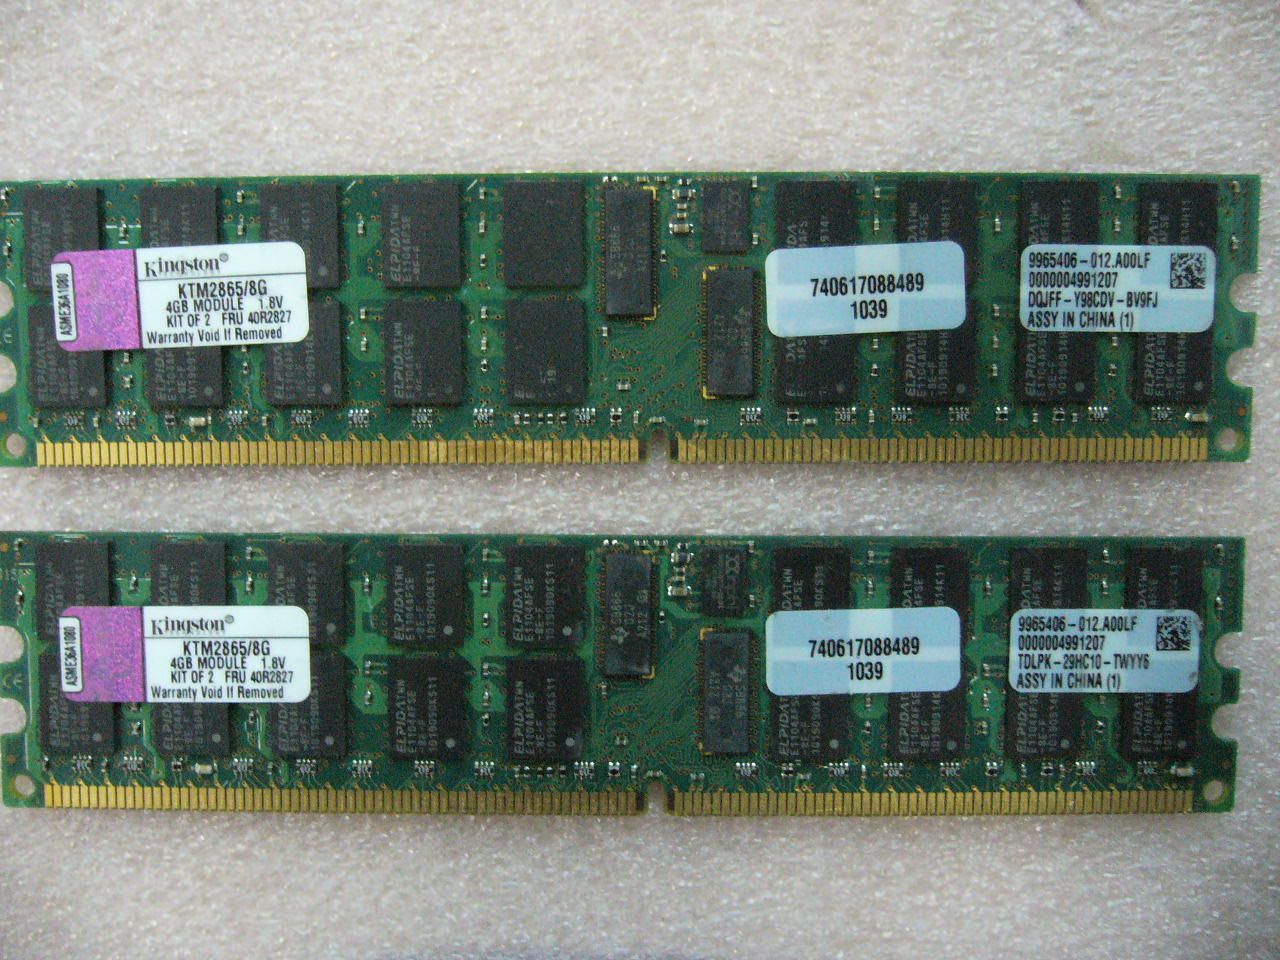 QTY 1x 4GB DDR2 PC2-3200R KTM2865/8G ECC Registered Server memory Kingston - Click Image to Close